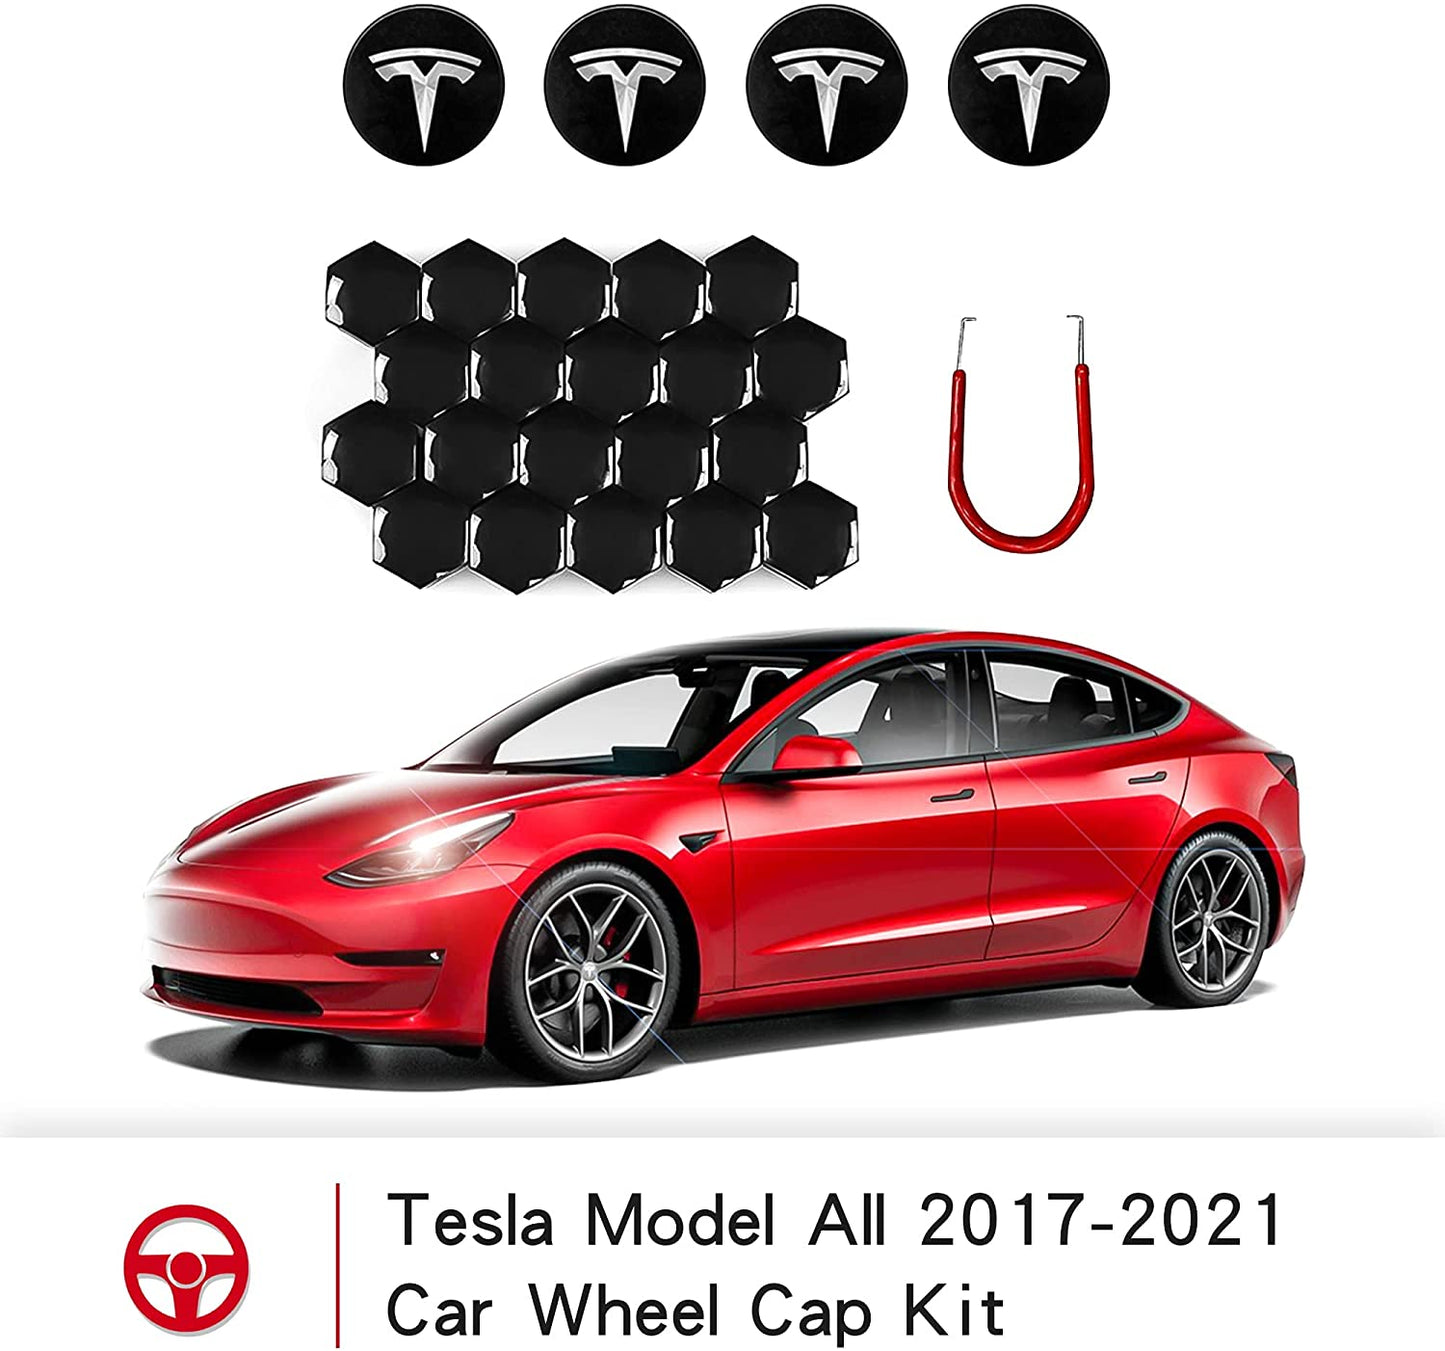 Tesla Model 3 Wheel Cap Kit Center Cap Lug Nut Cover Fit for Model Y Model S Model X Car Accessories White&Black (4 Hub Center Cap + 20 Lug Nut Cover)